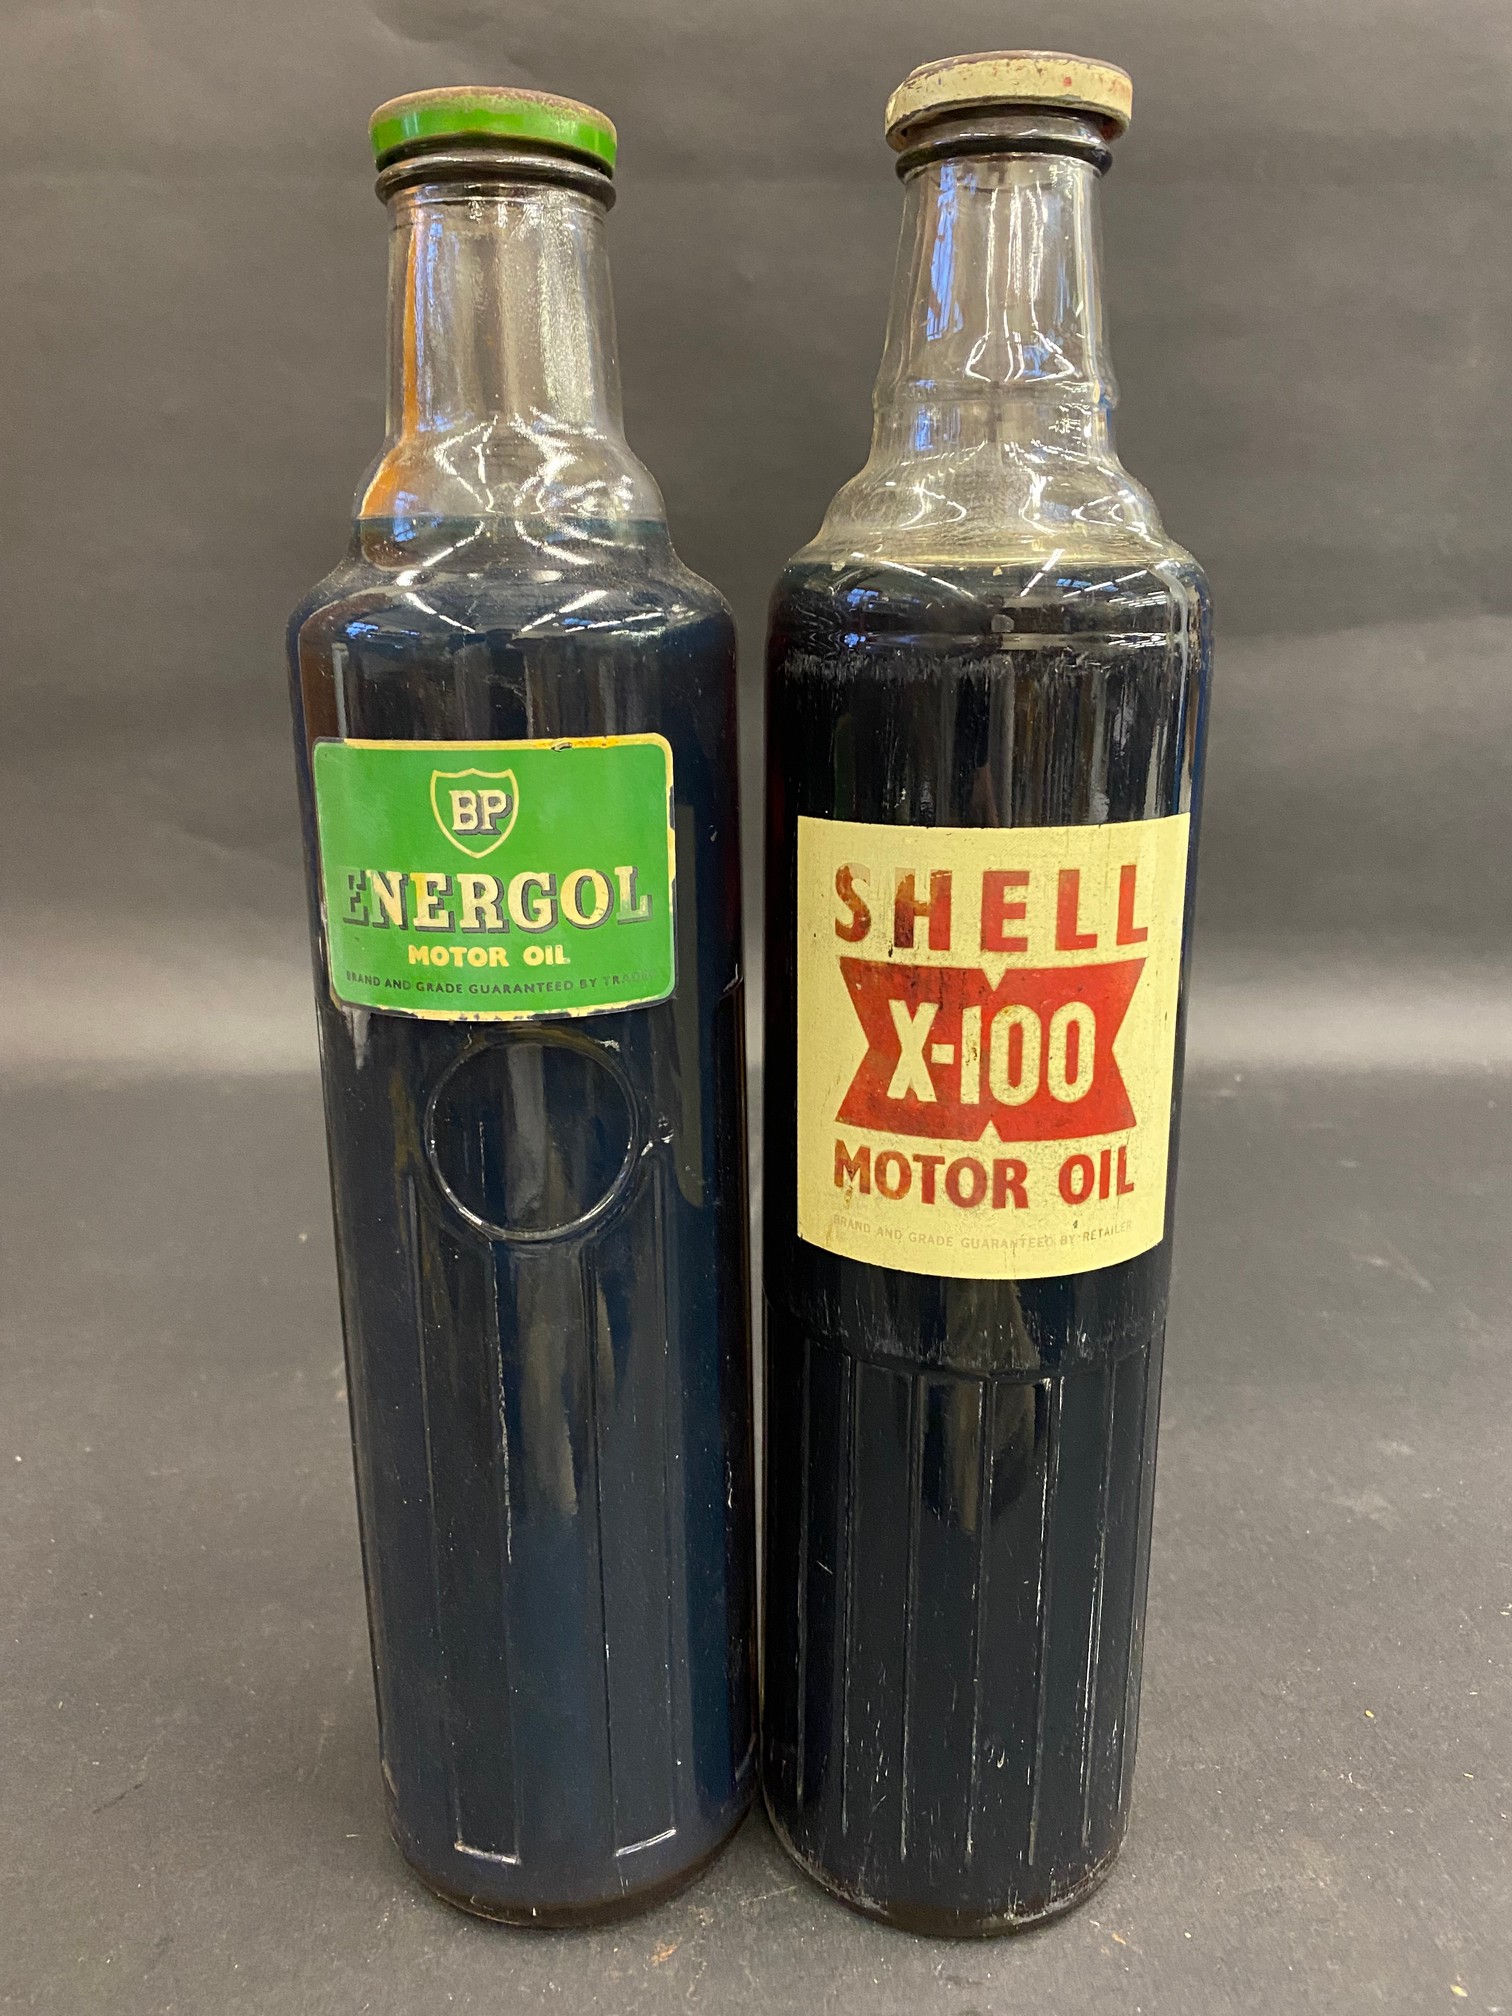 A Shell X-100 quart oil bottle plus a BP Energol quart bottle.